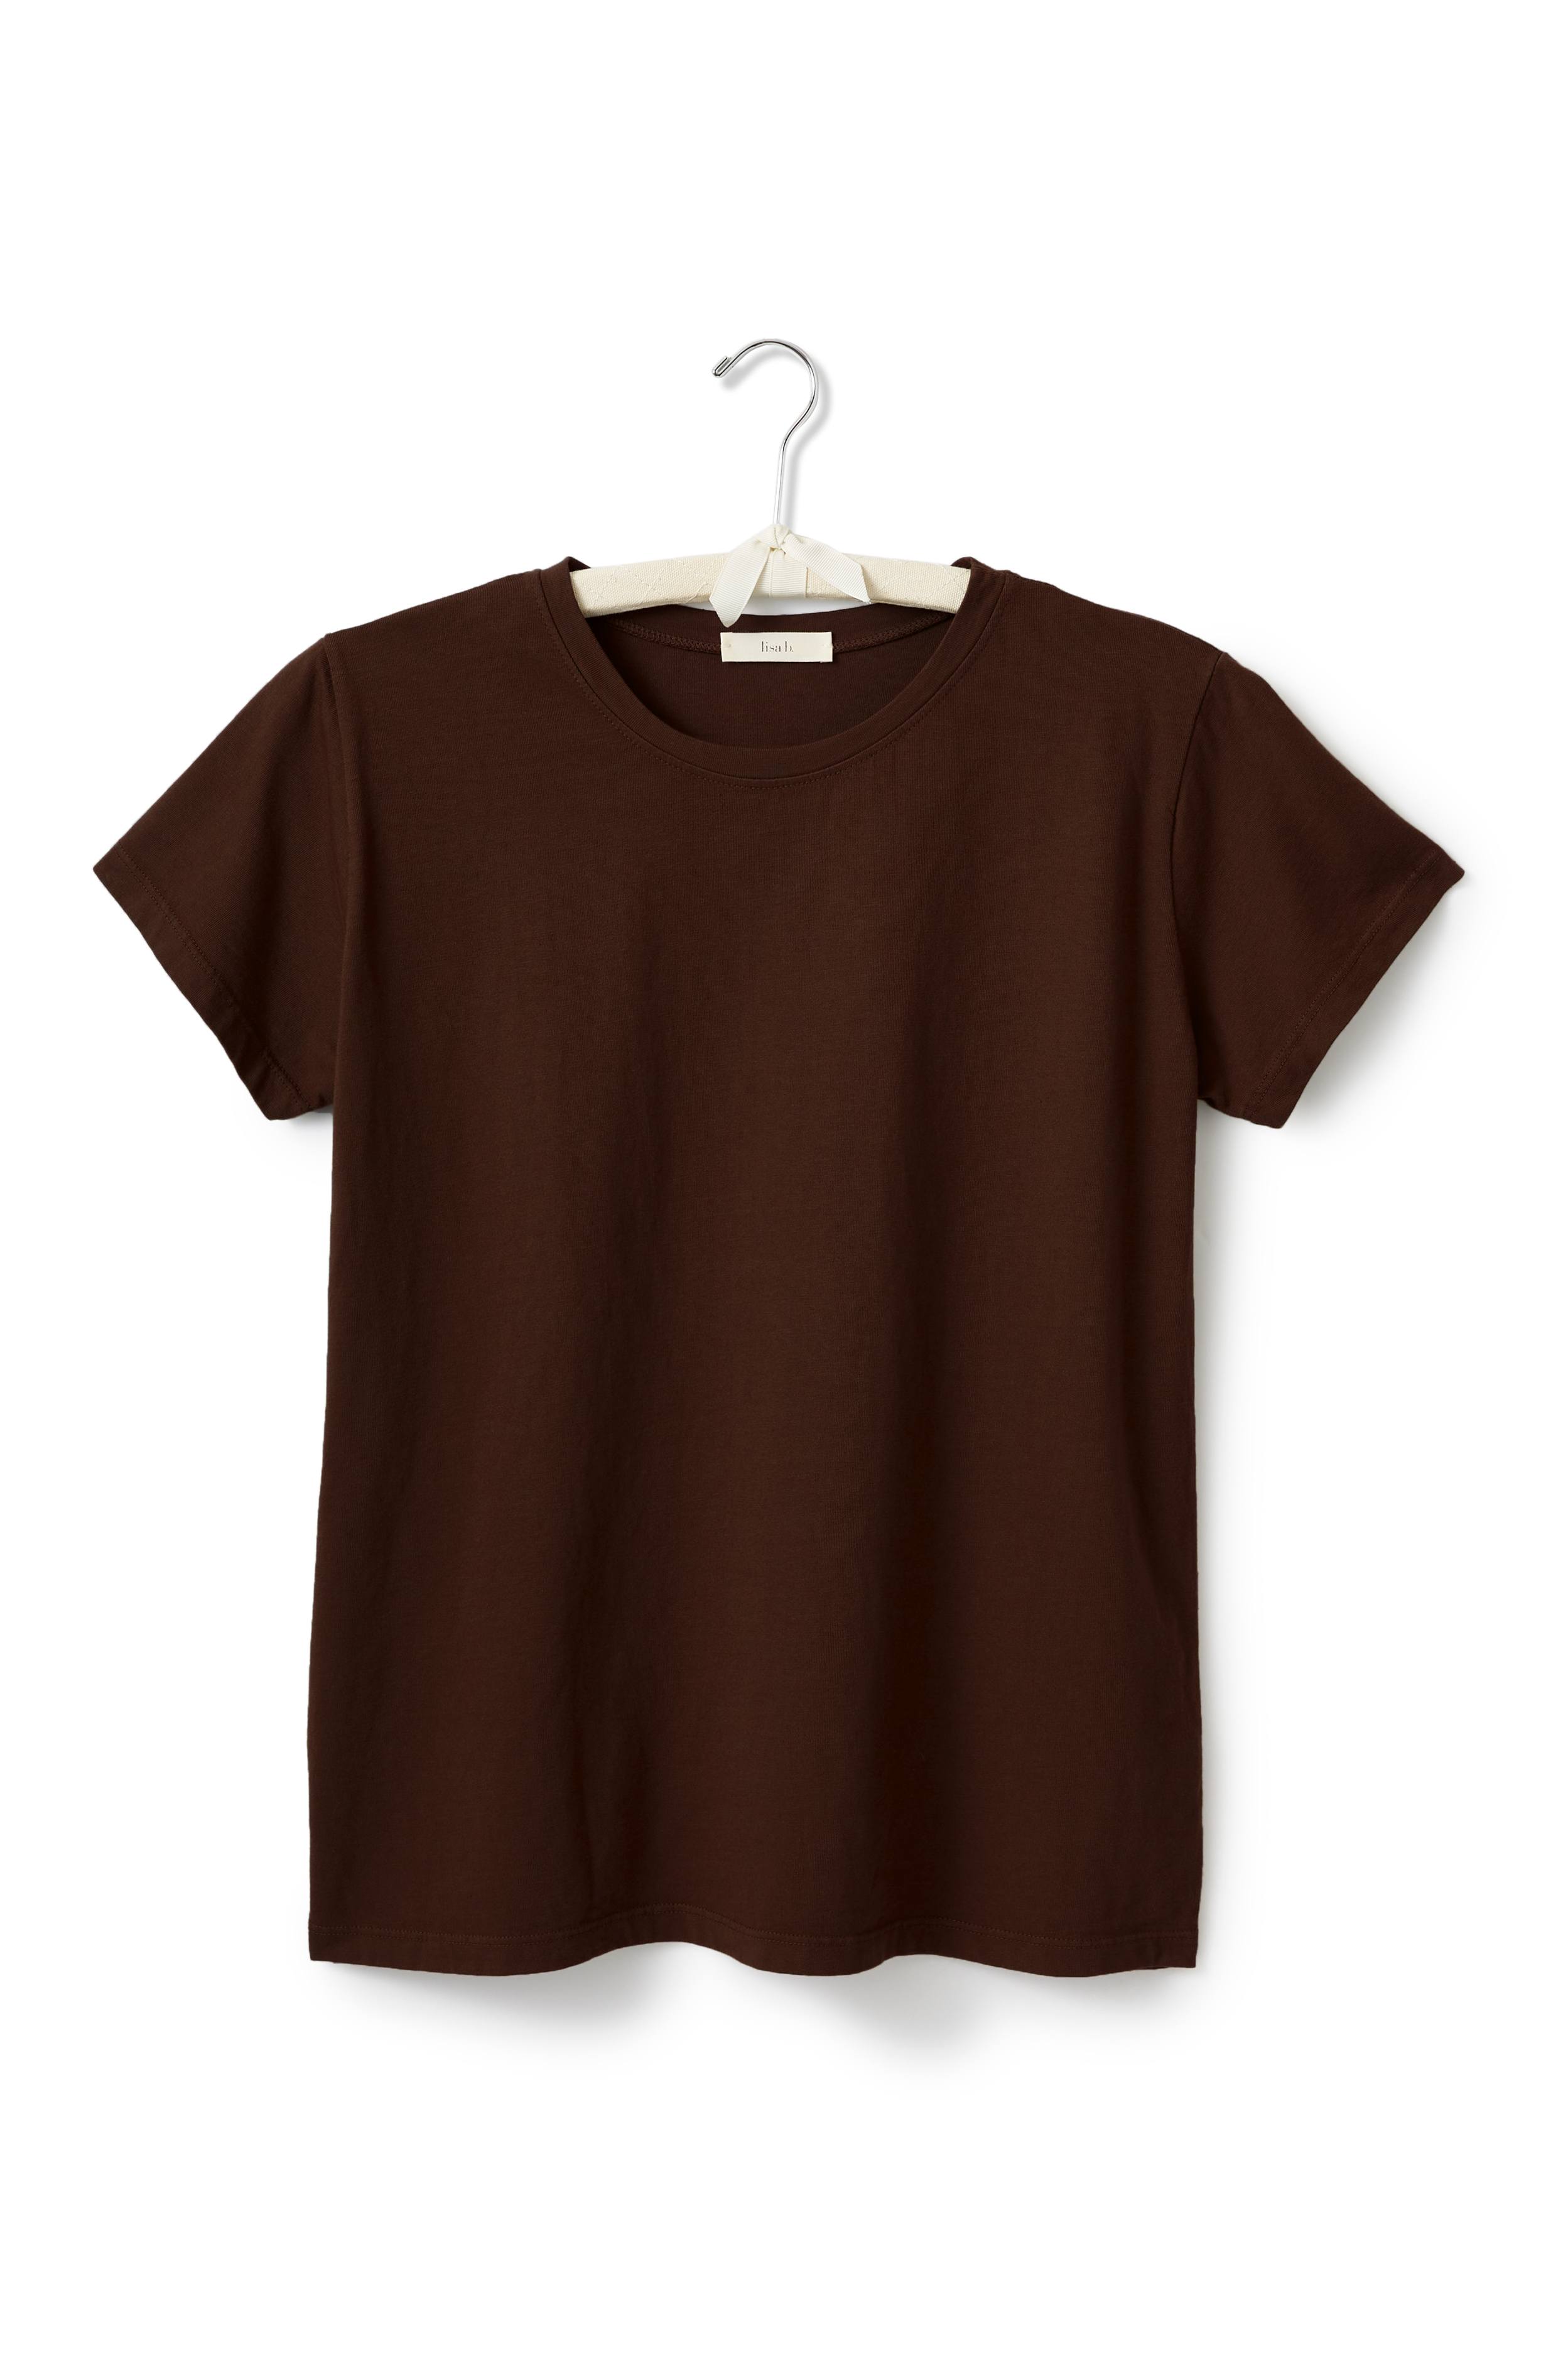 short sleeve relaxed crew neck tee shirt Cotton Knits lisa b. dark chocolate x-small (0-2) 